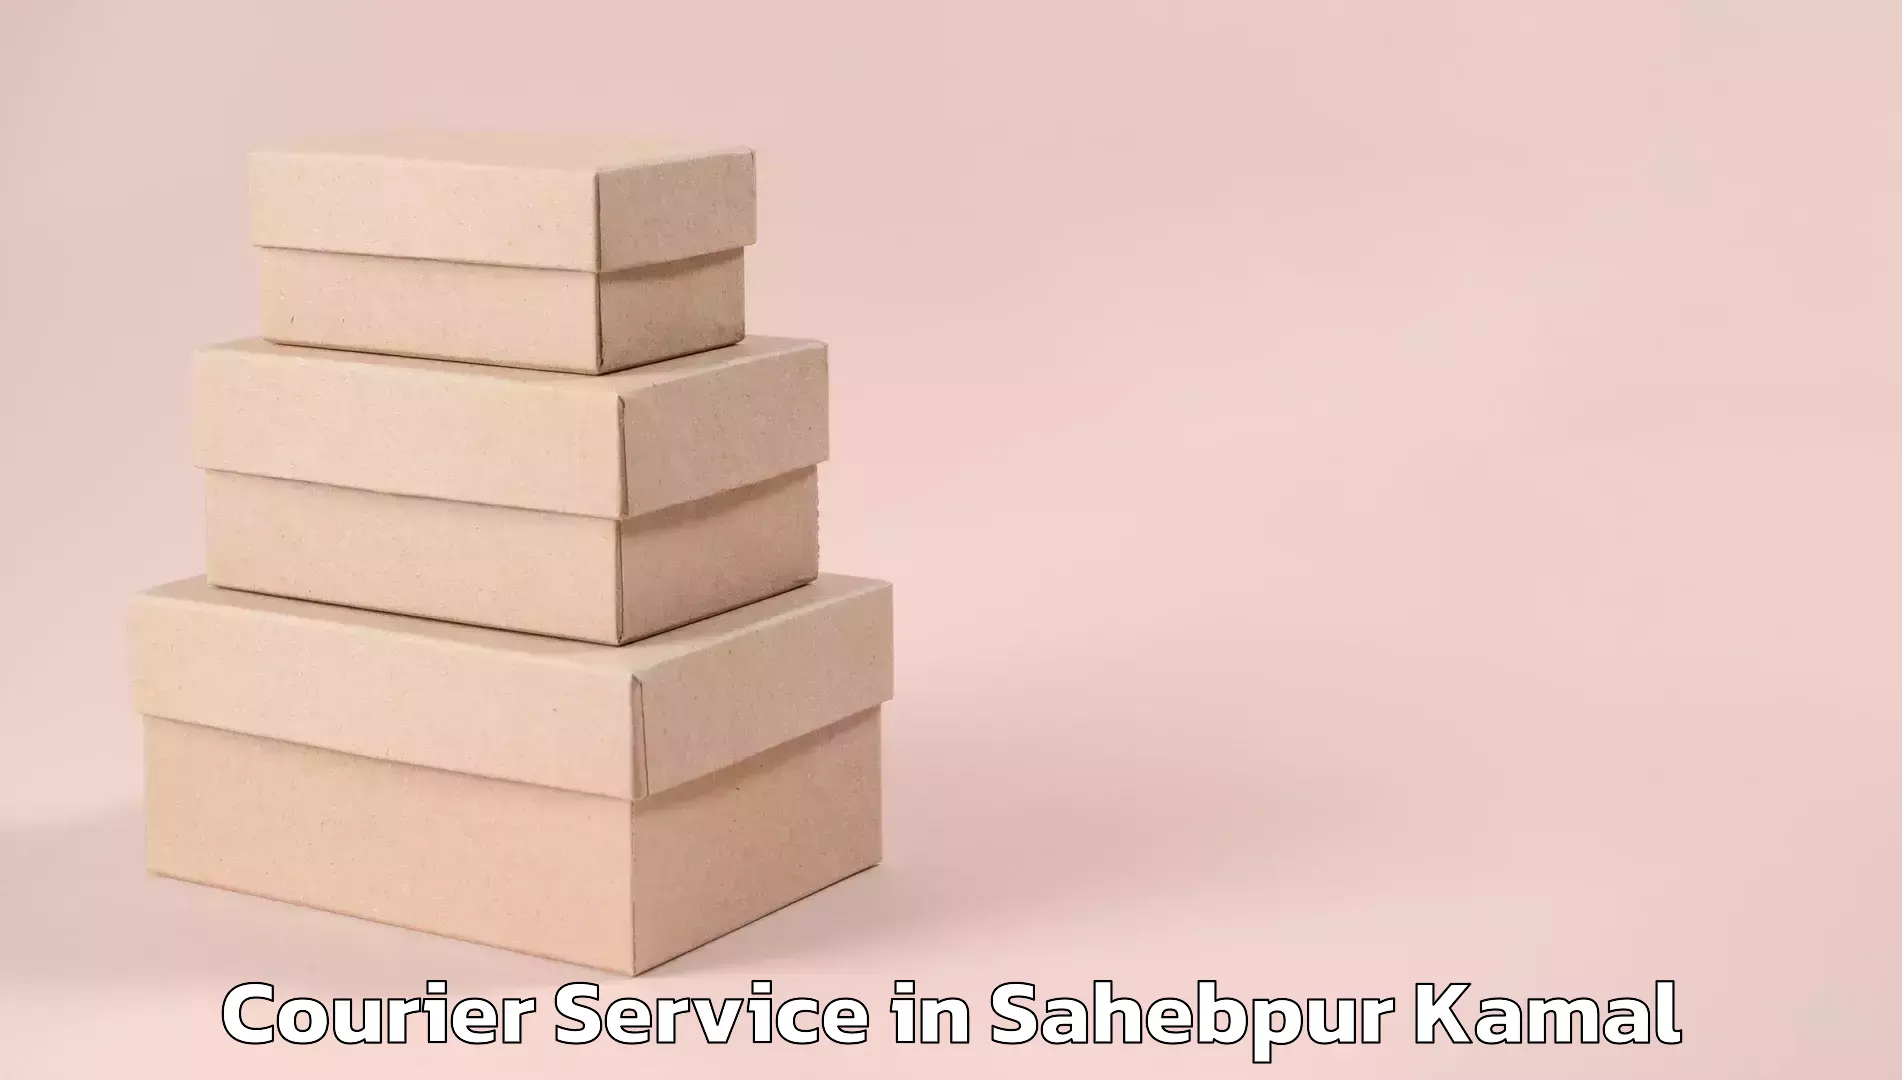 Courier service innovation in Sahebpur Kamal